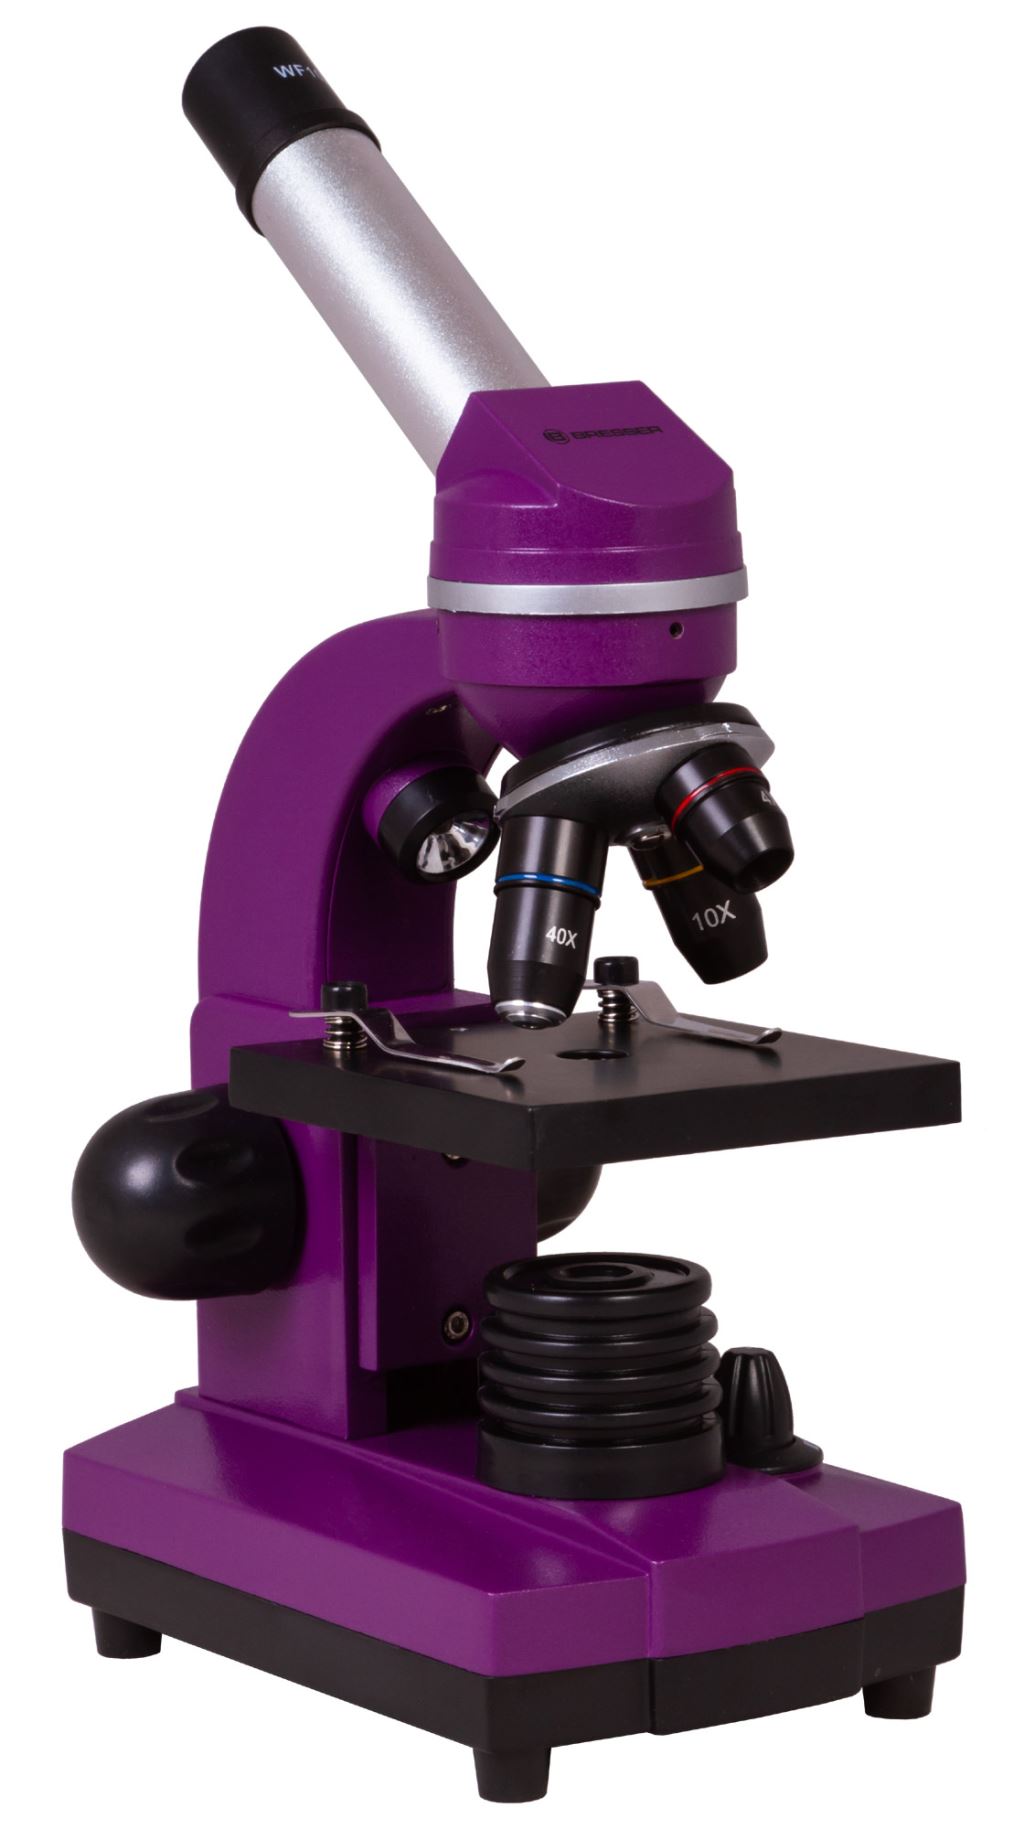 Bresser Junior Biolux SEL 40–1600x mikroszkóp lila (74321)